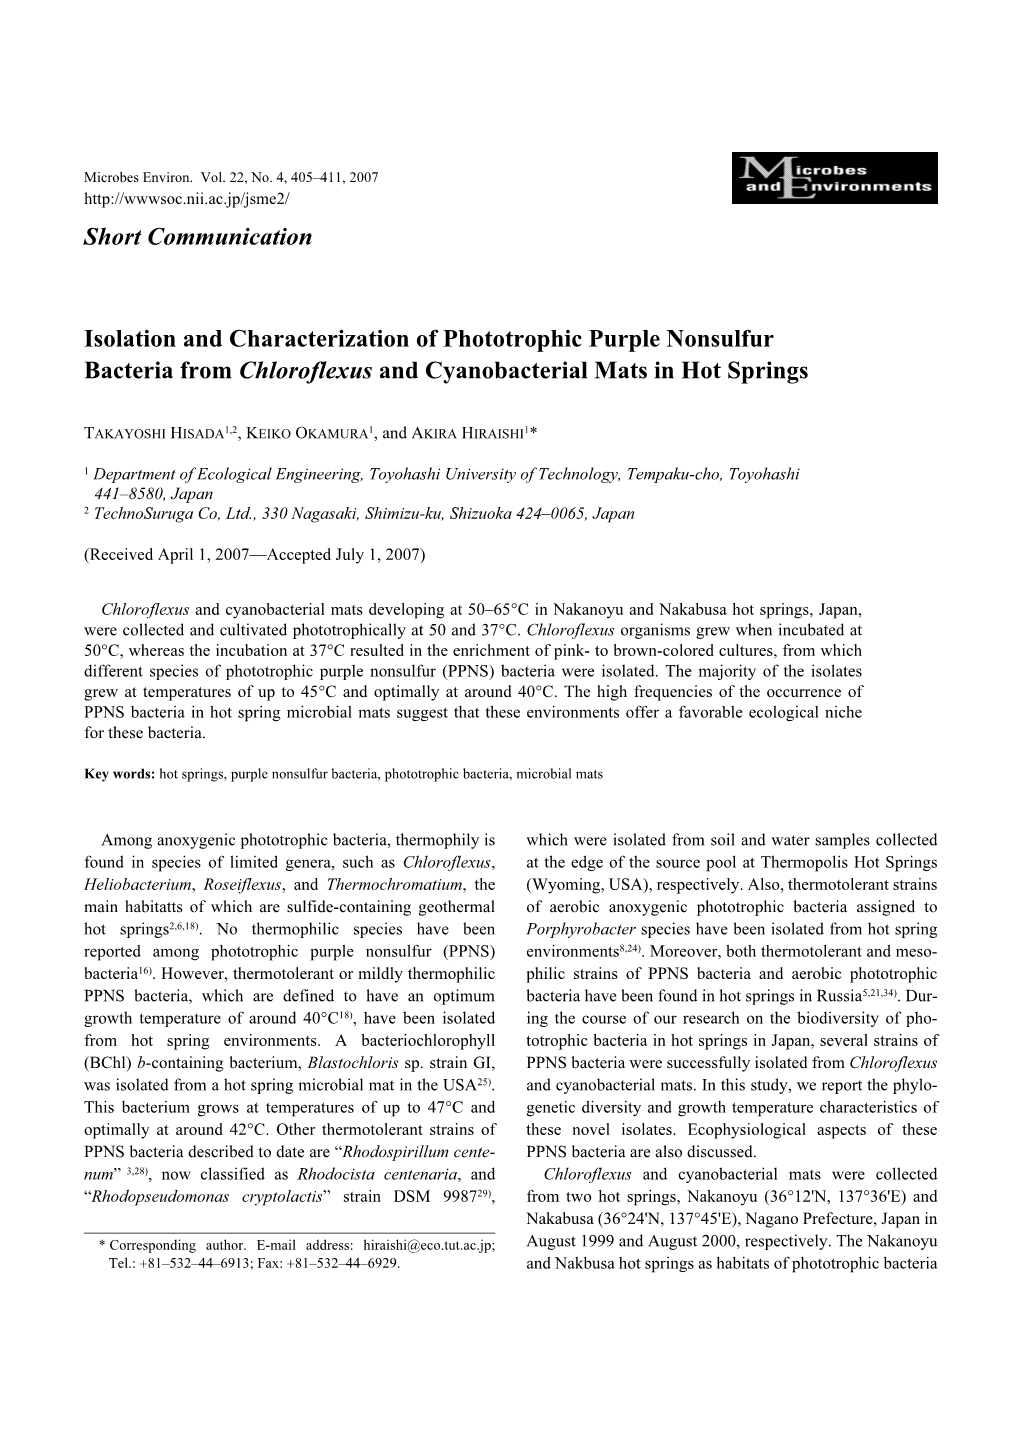 Short Communication Isolation and Characterization of Phototrophic